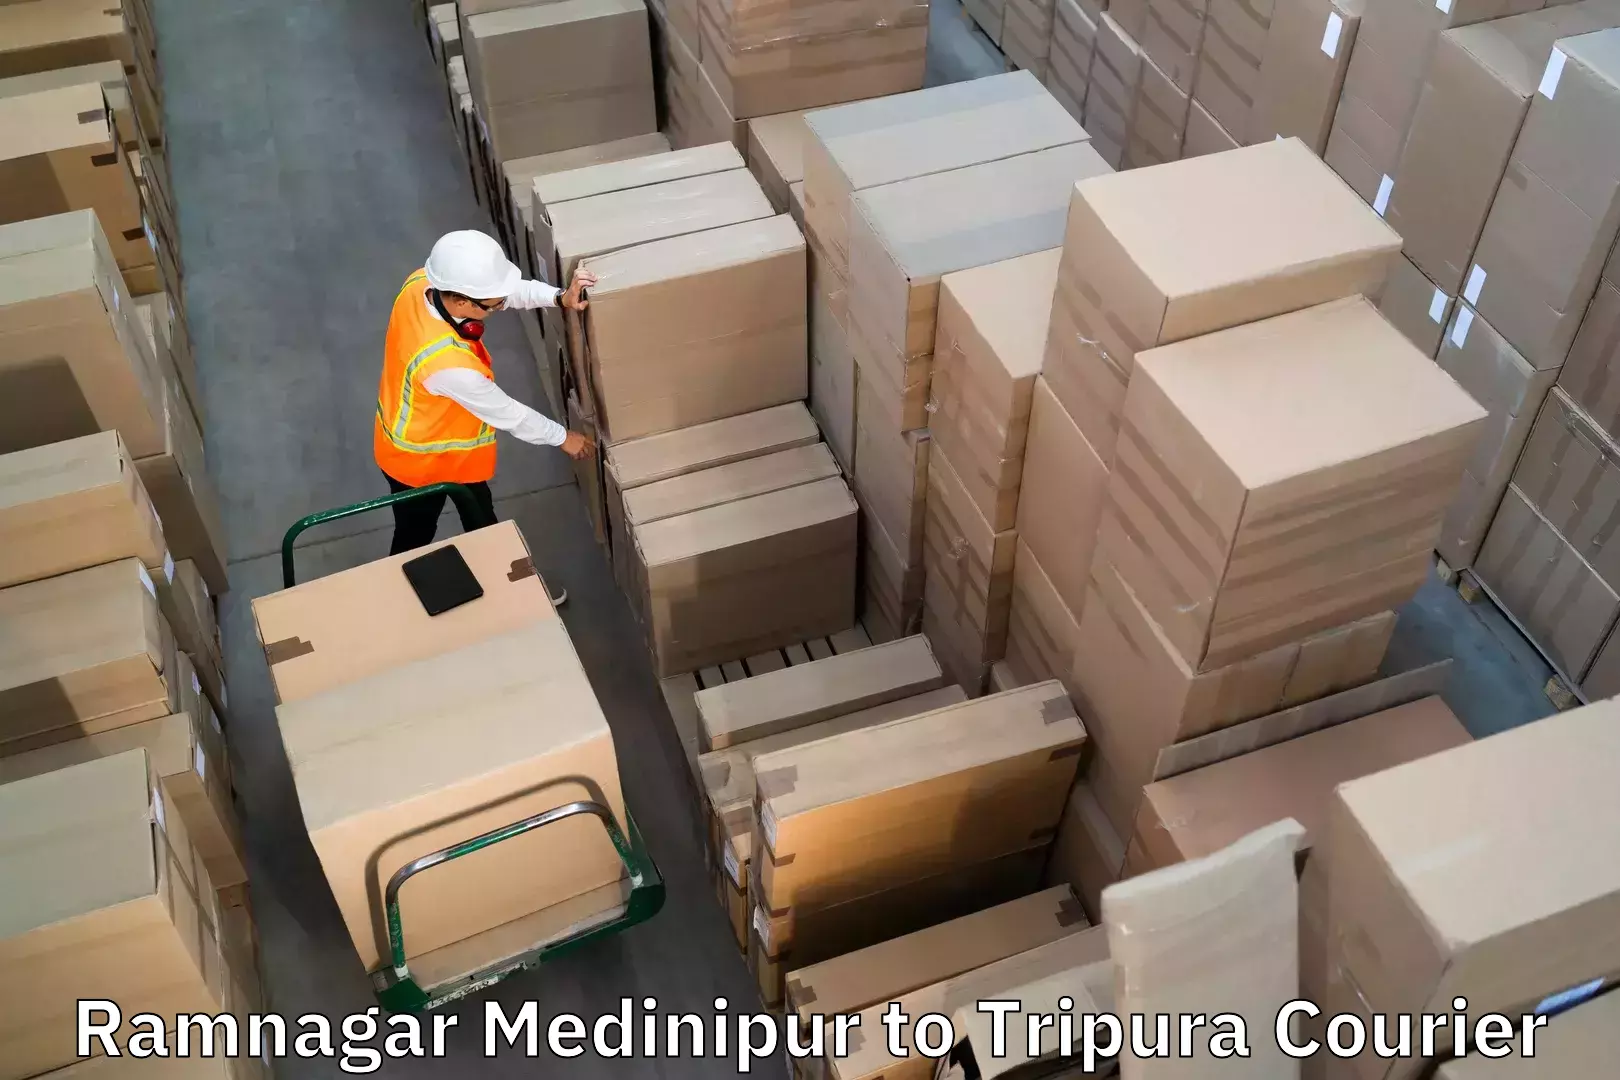 Baggage relocation service Ramnagar Medinipur to Dhalai